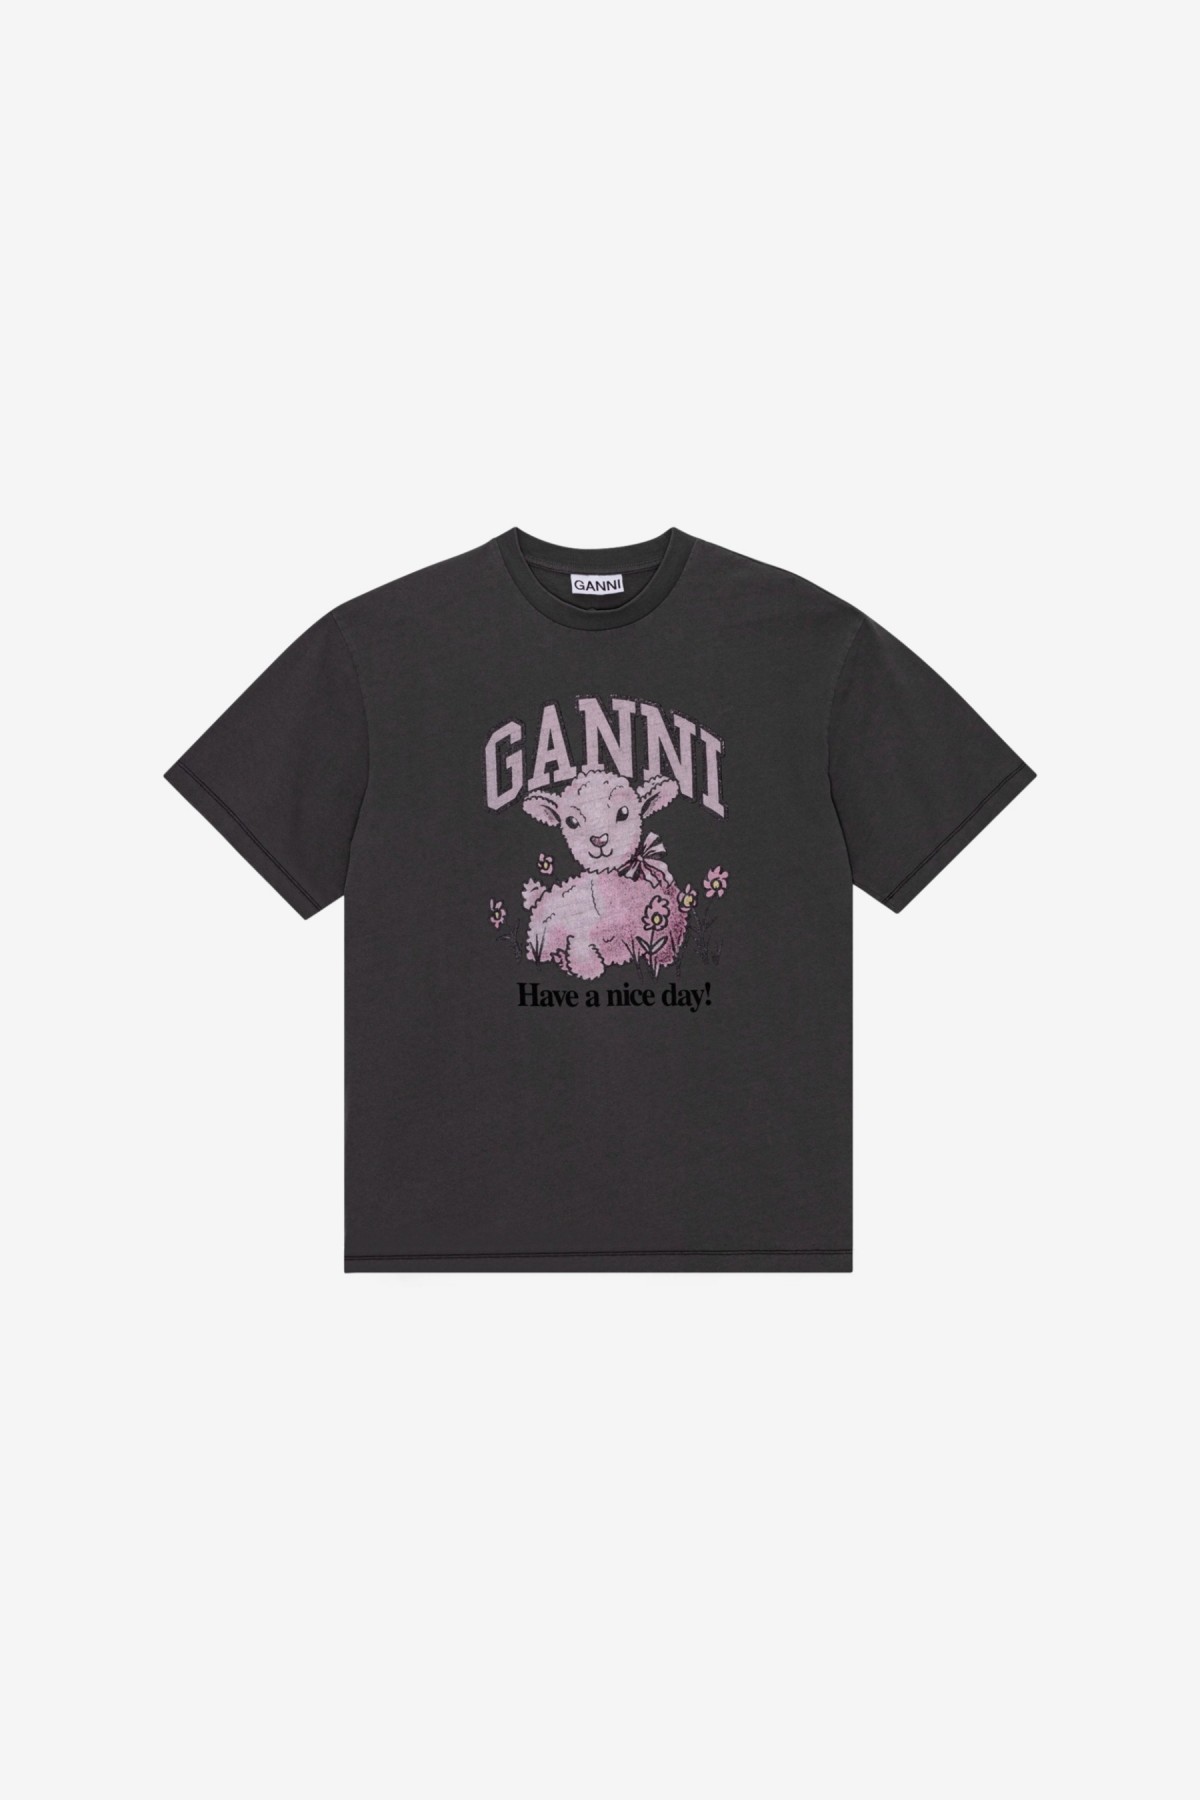 Ganni Future Heavy Jersey Lamb Short Sleeve T-shirt in Volcanic Ash